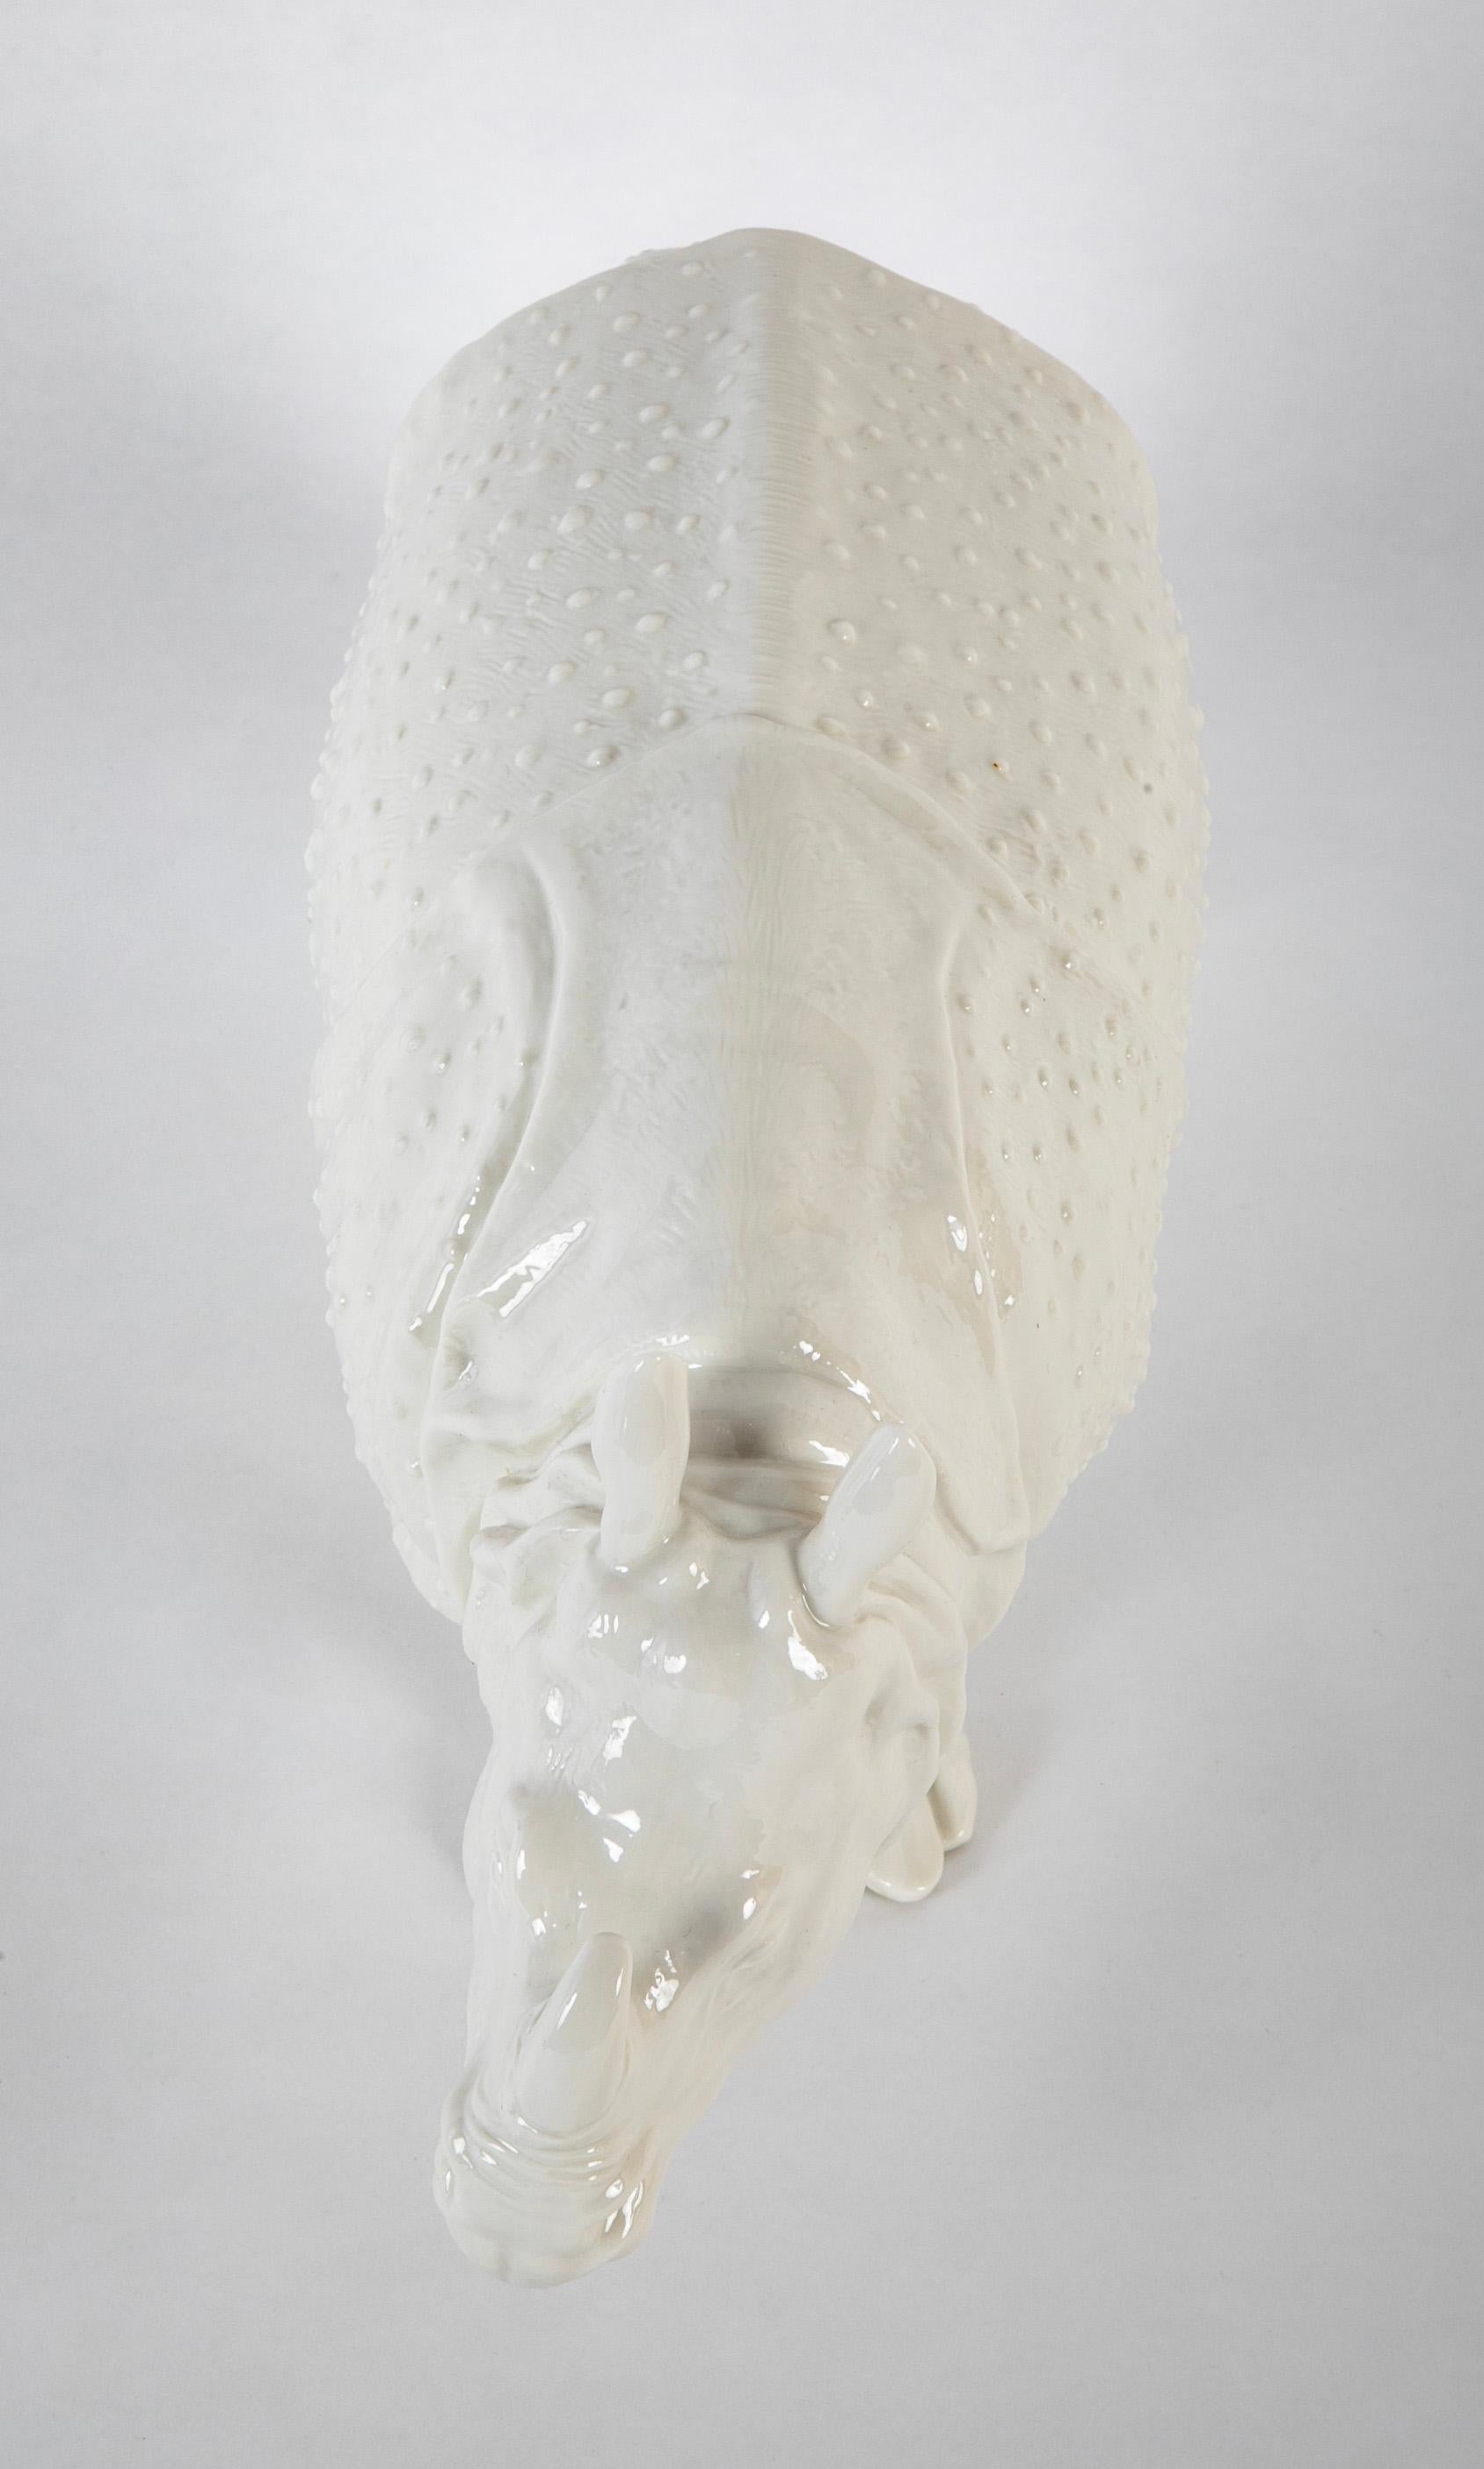 Rhino Clara Nymphenburg Frankenthaler Model in White Glazed Porcelain For Sale 5